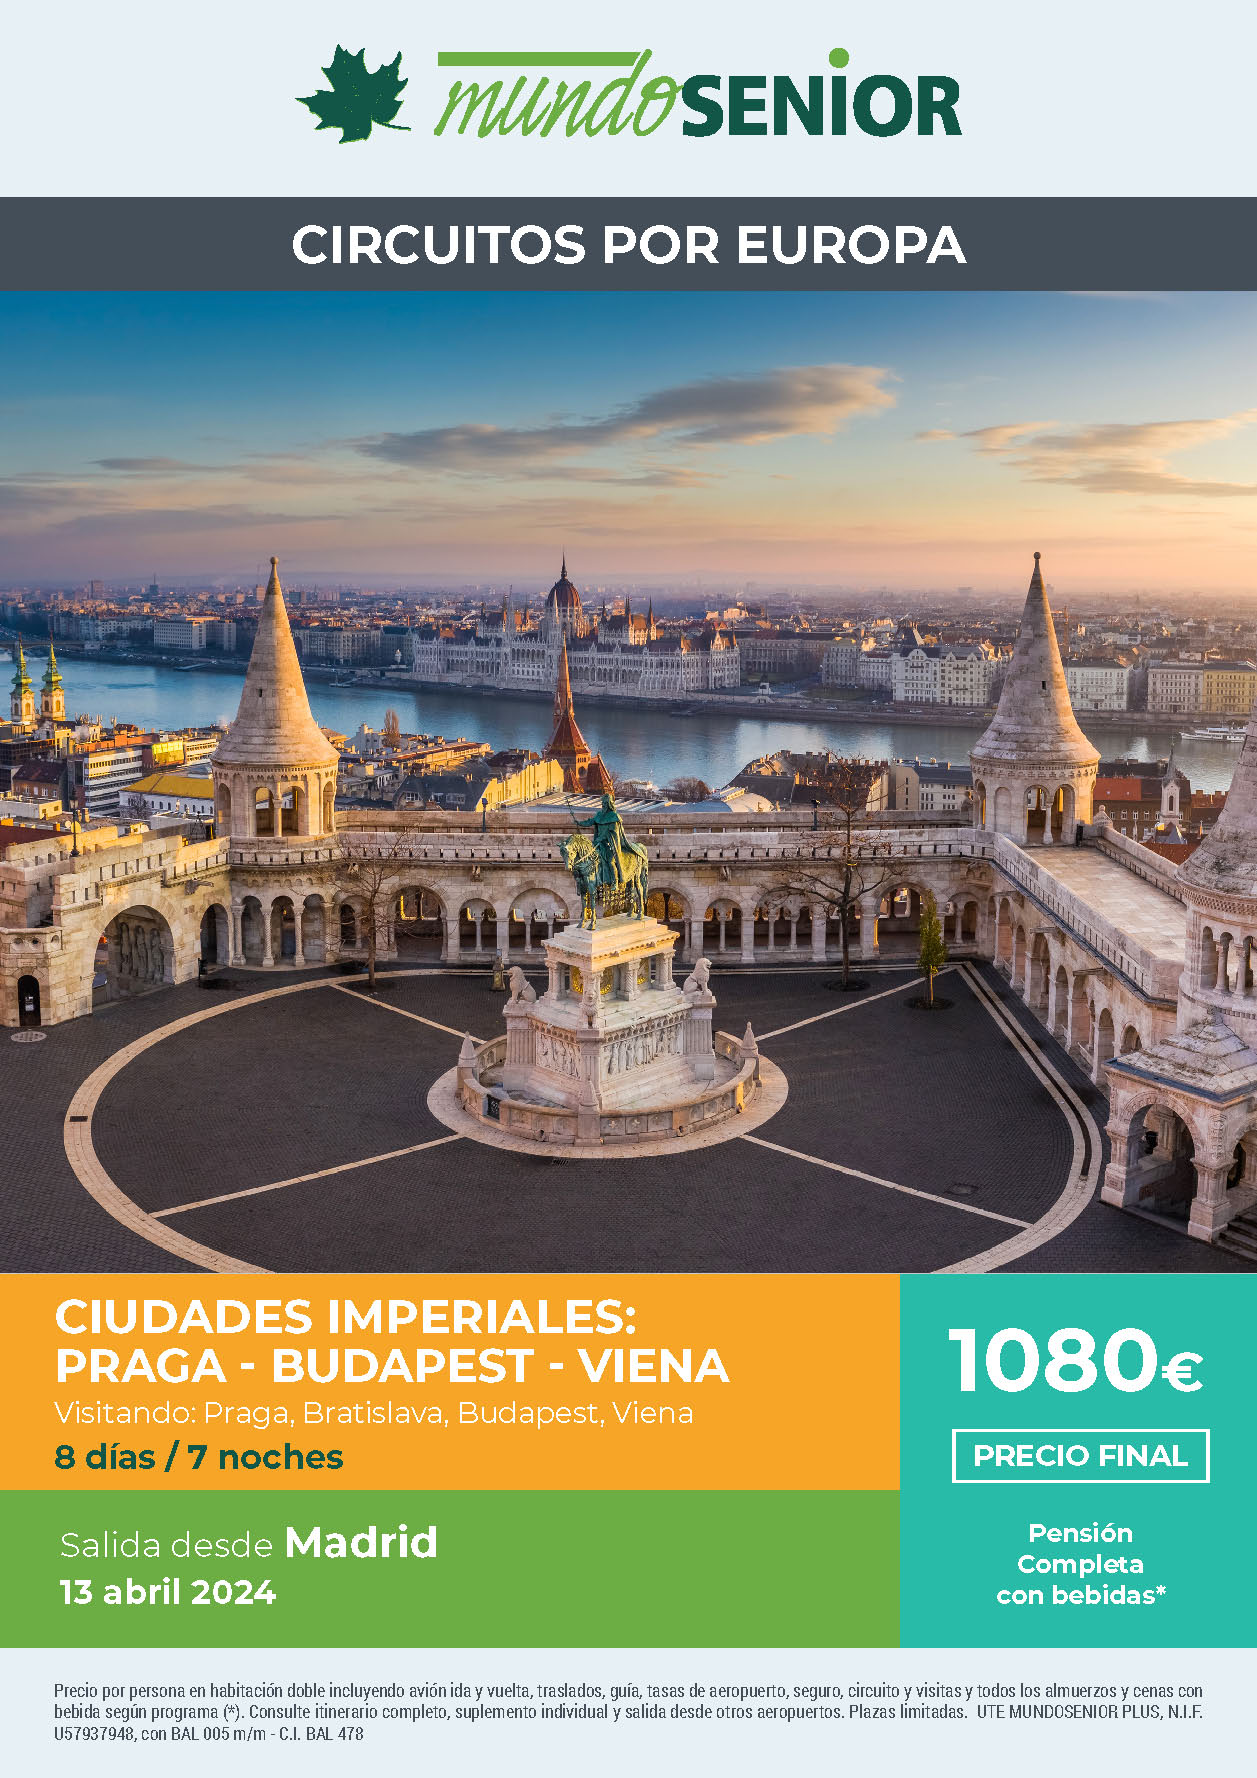 Oferta Mundo Senior circuito Praga Budapest Viena Pension Completa 8 dias salida 13 abril 2024 vuelo directo desde Madrid